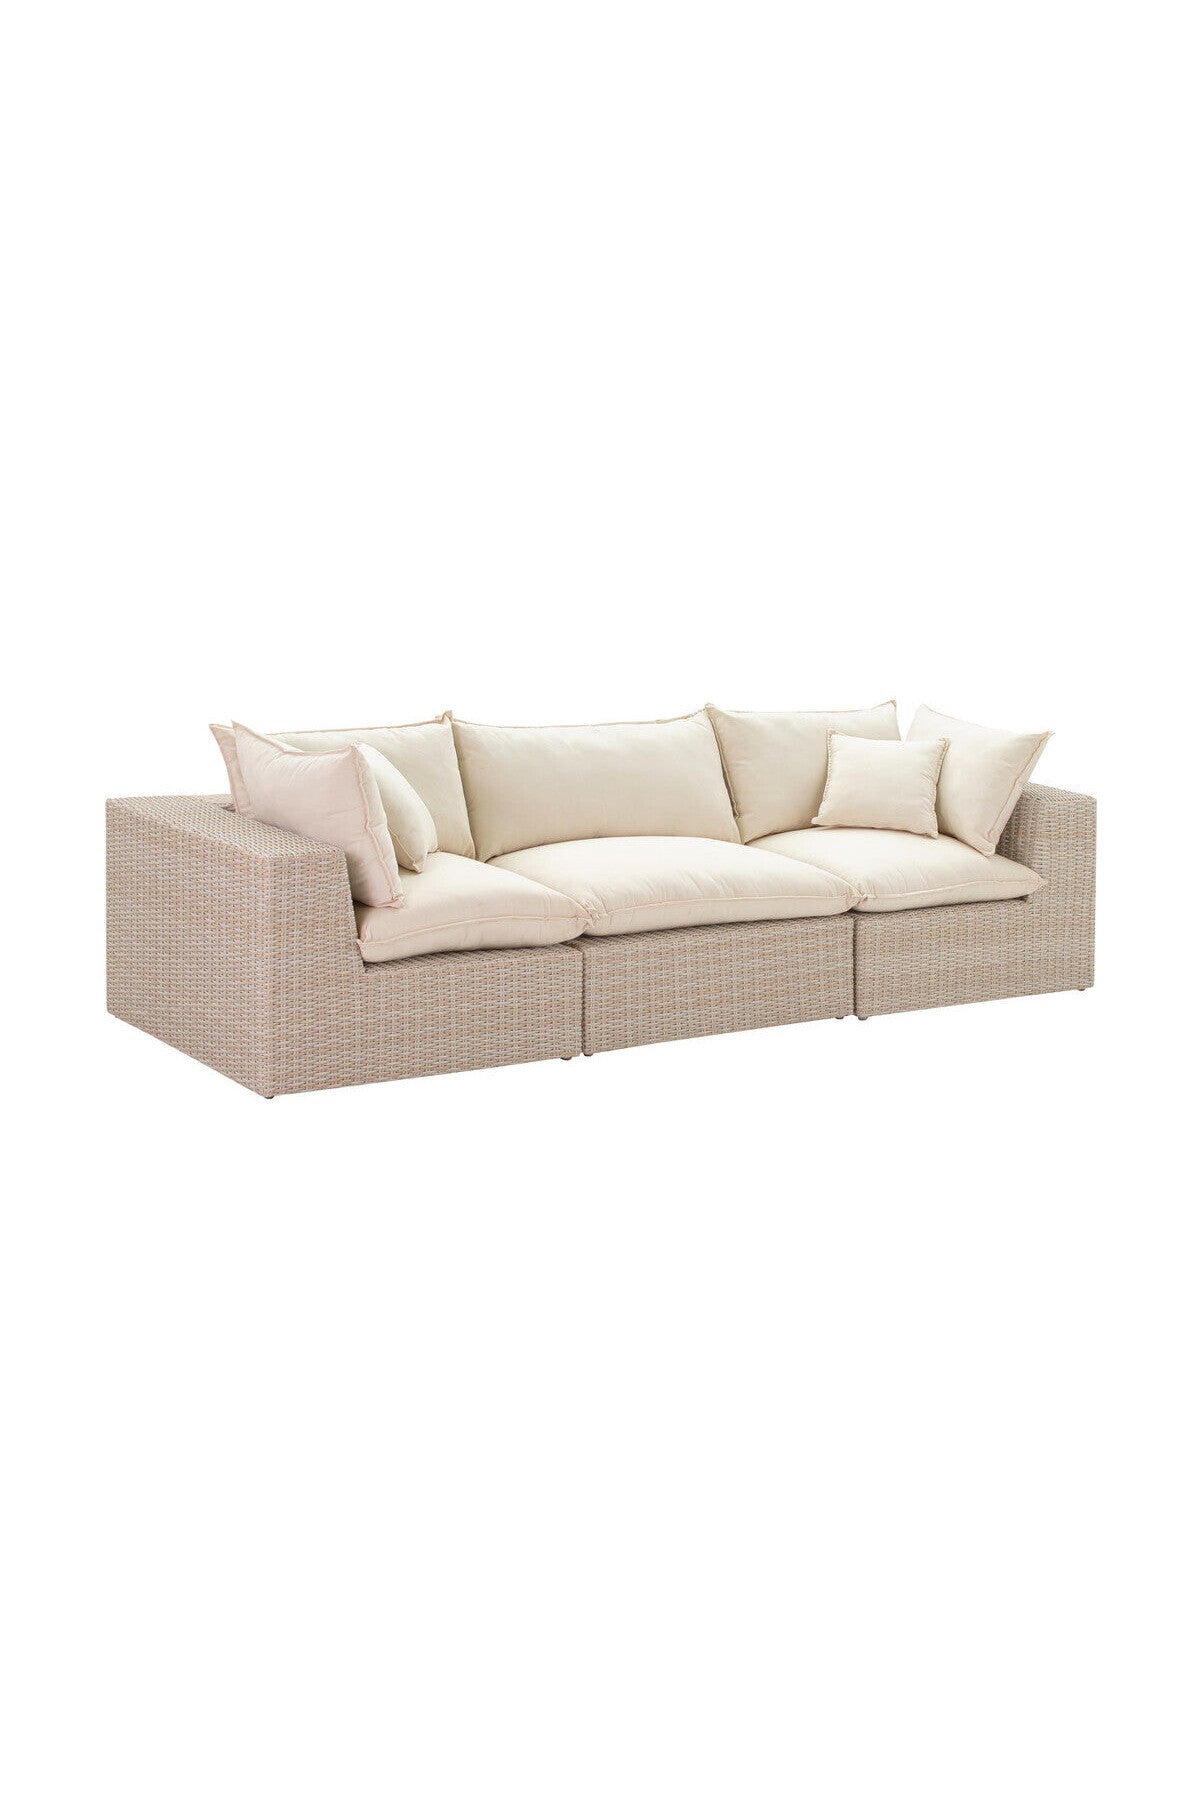 Newport Outdoor Sofa - 2 Sizes